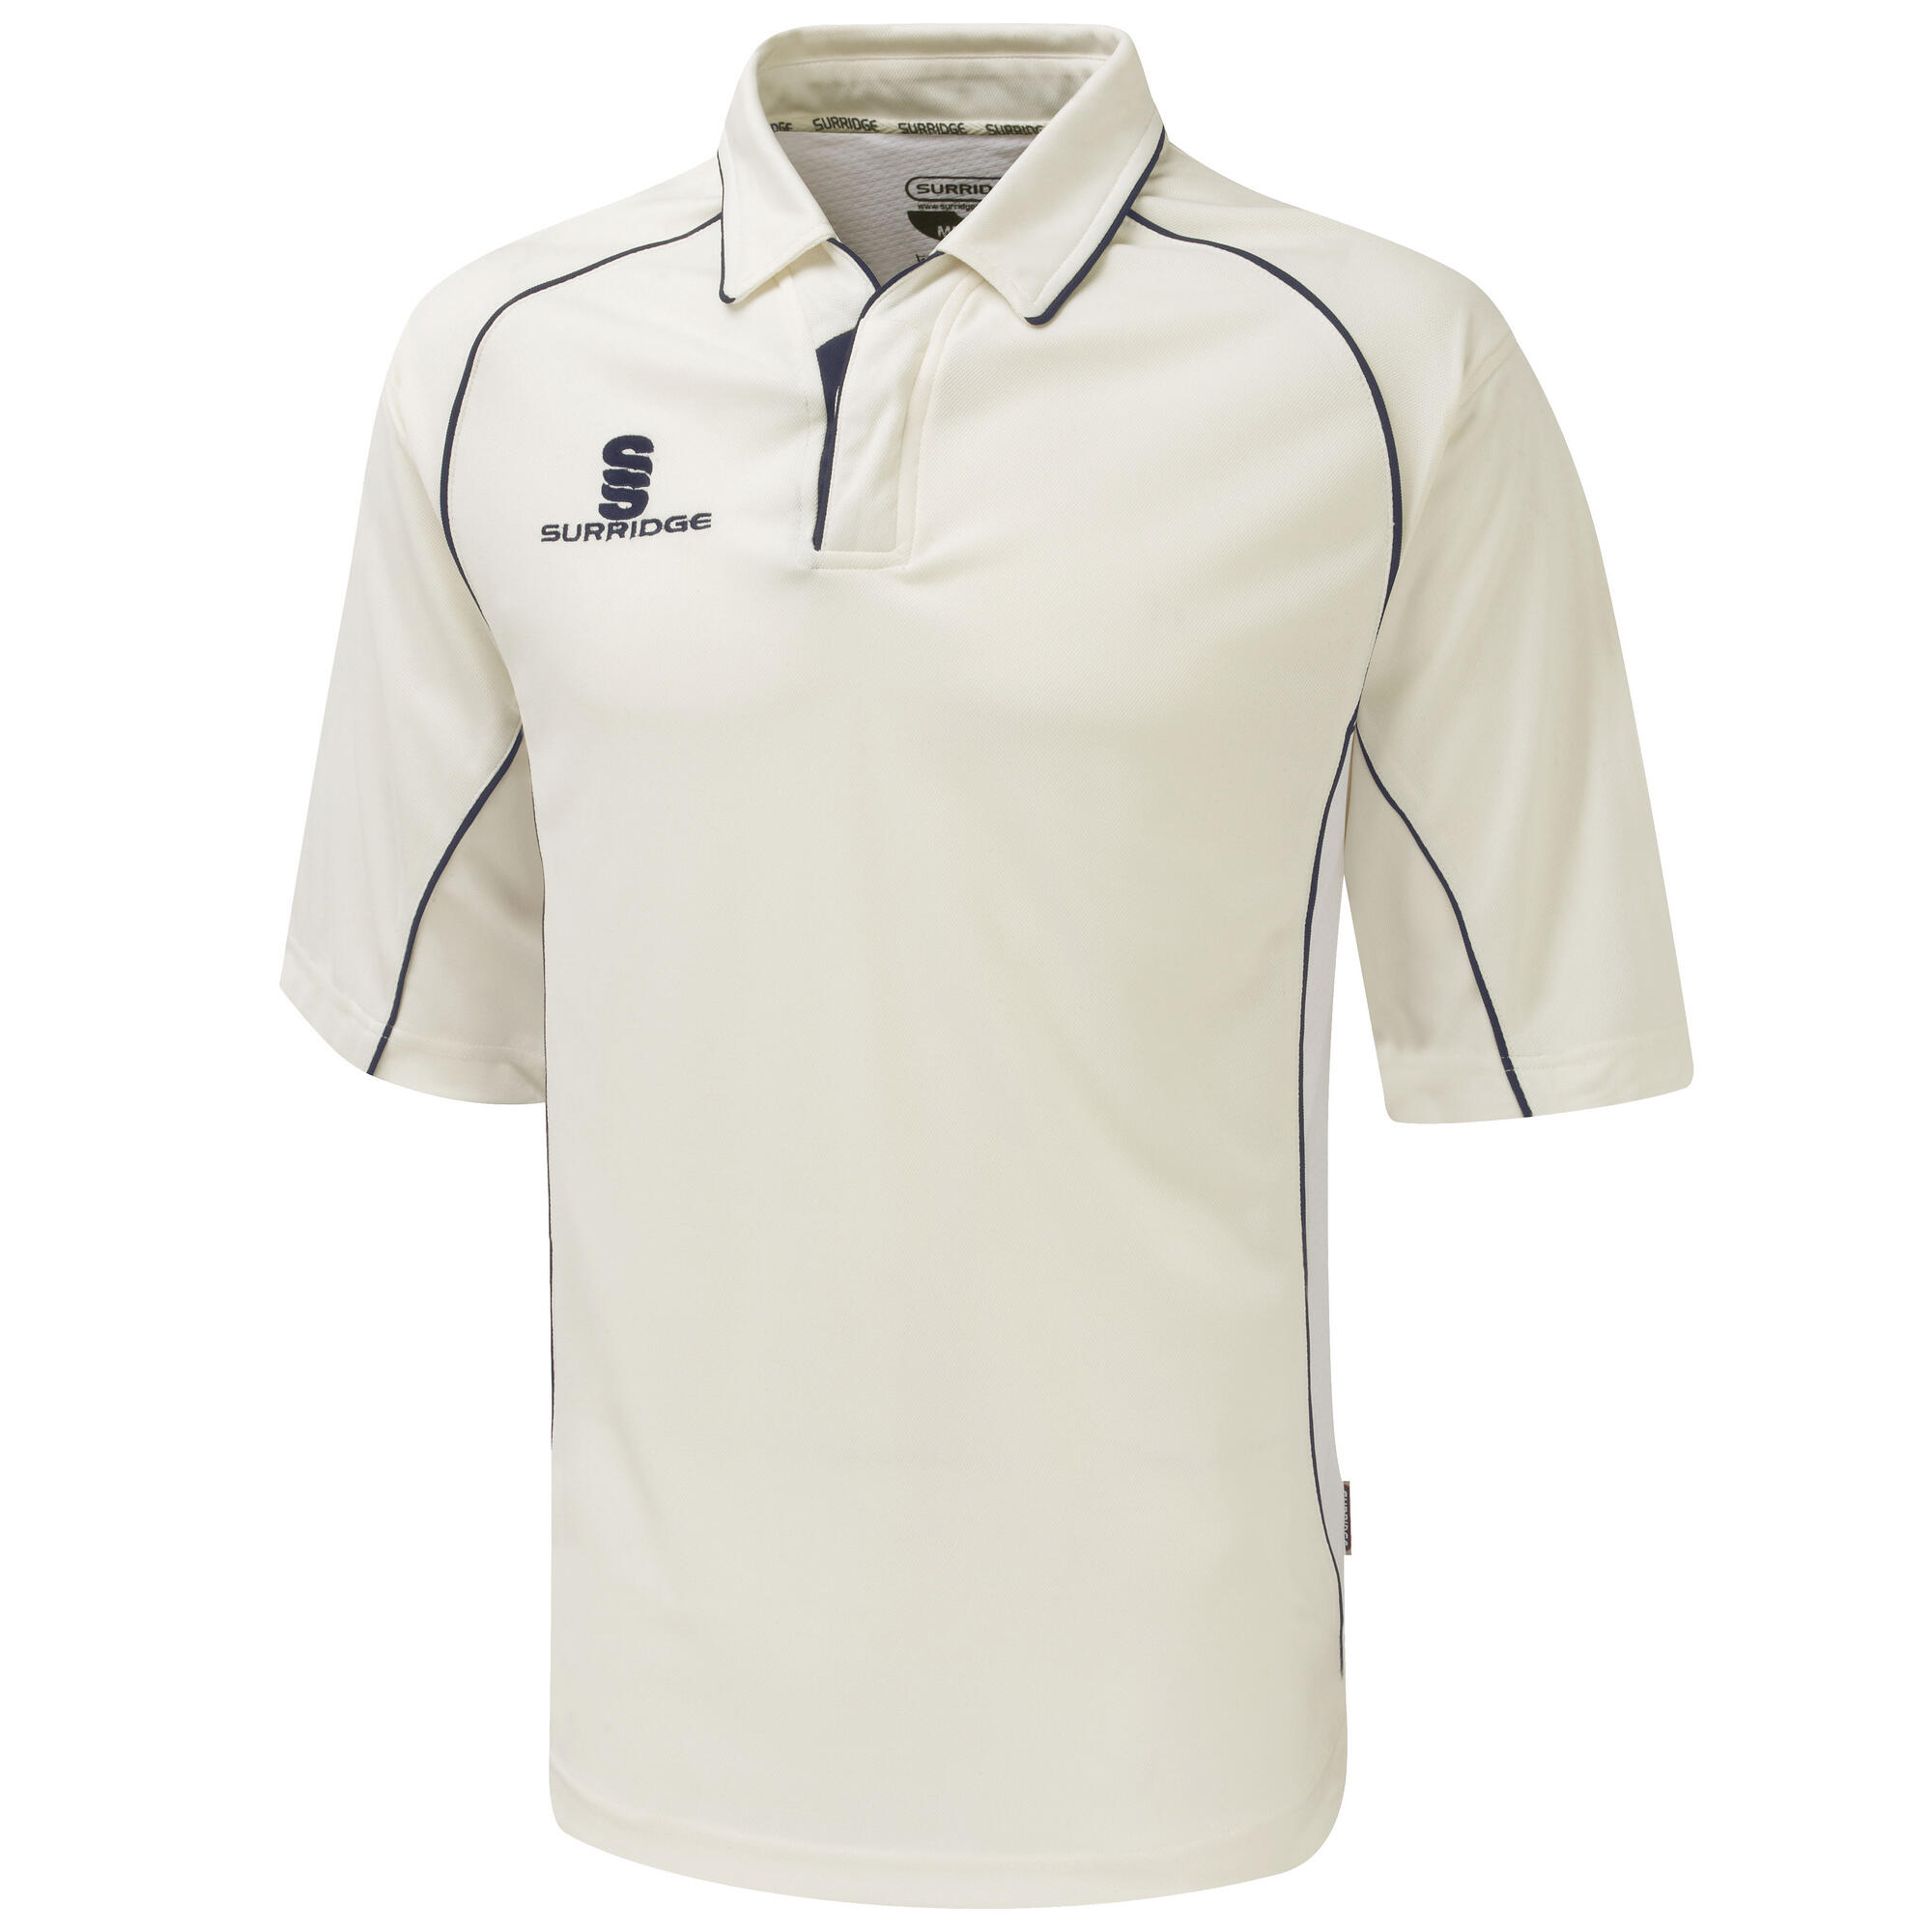 Mens/Youth Premier Sports 3/4 Sleeve Polo Shirt (White/Navy trim) 1/1